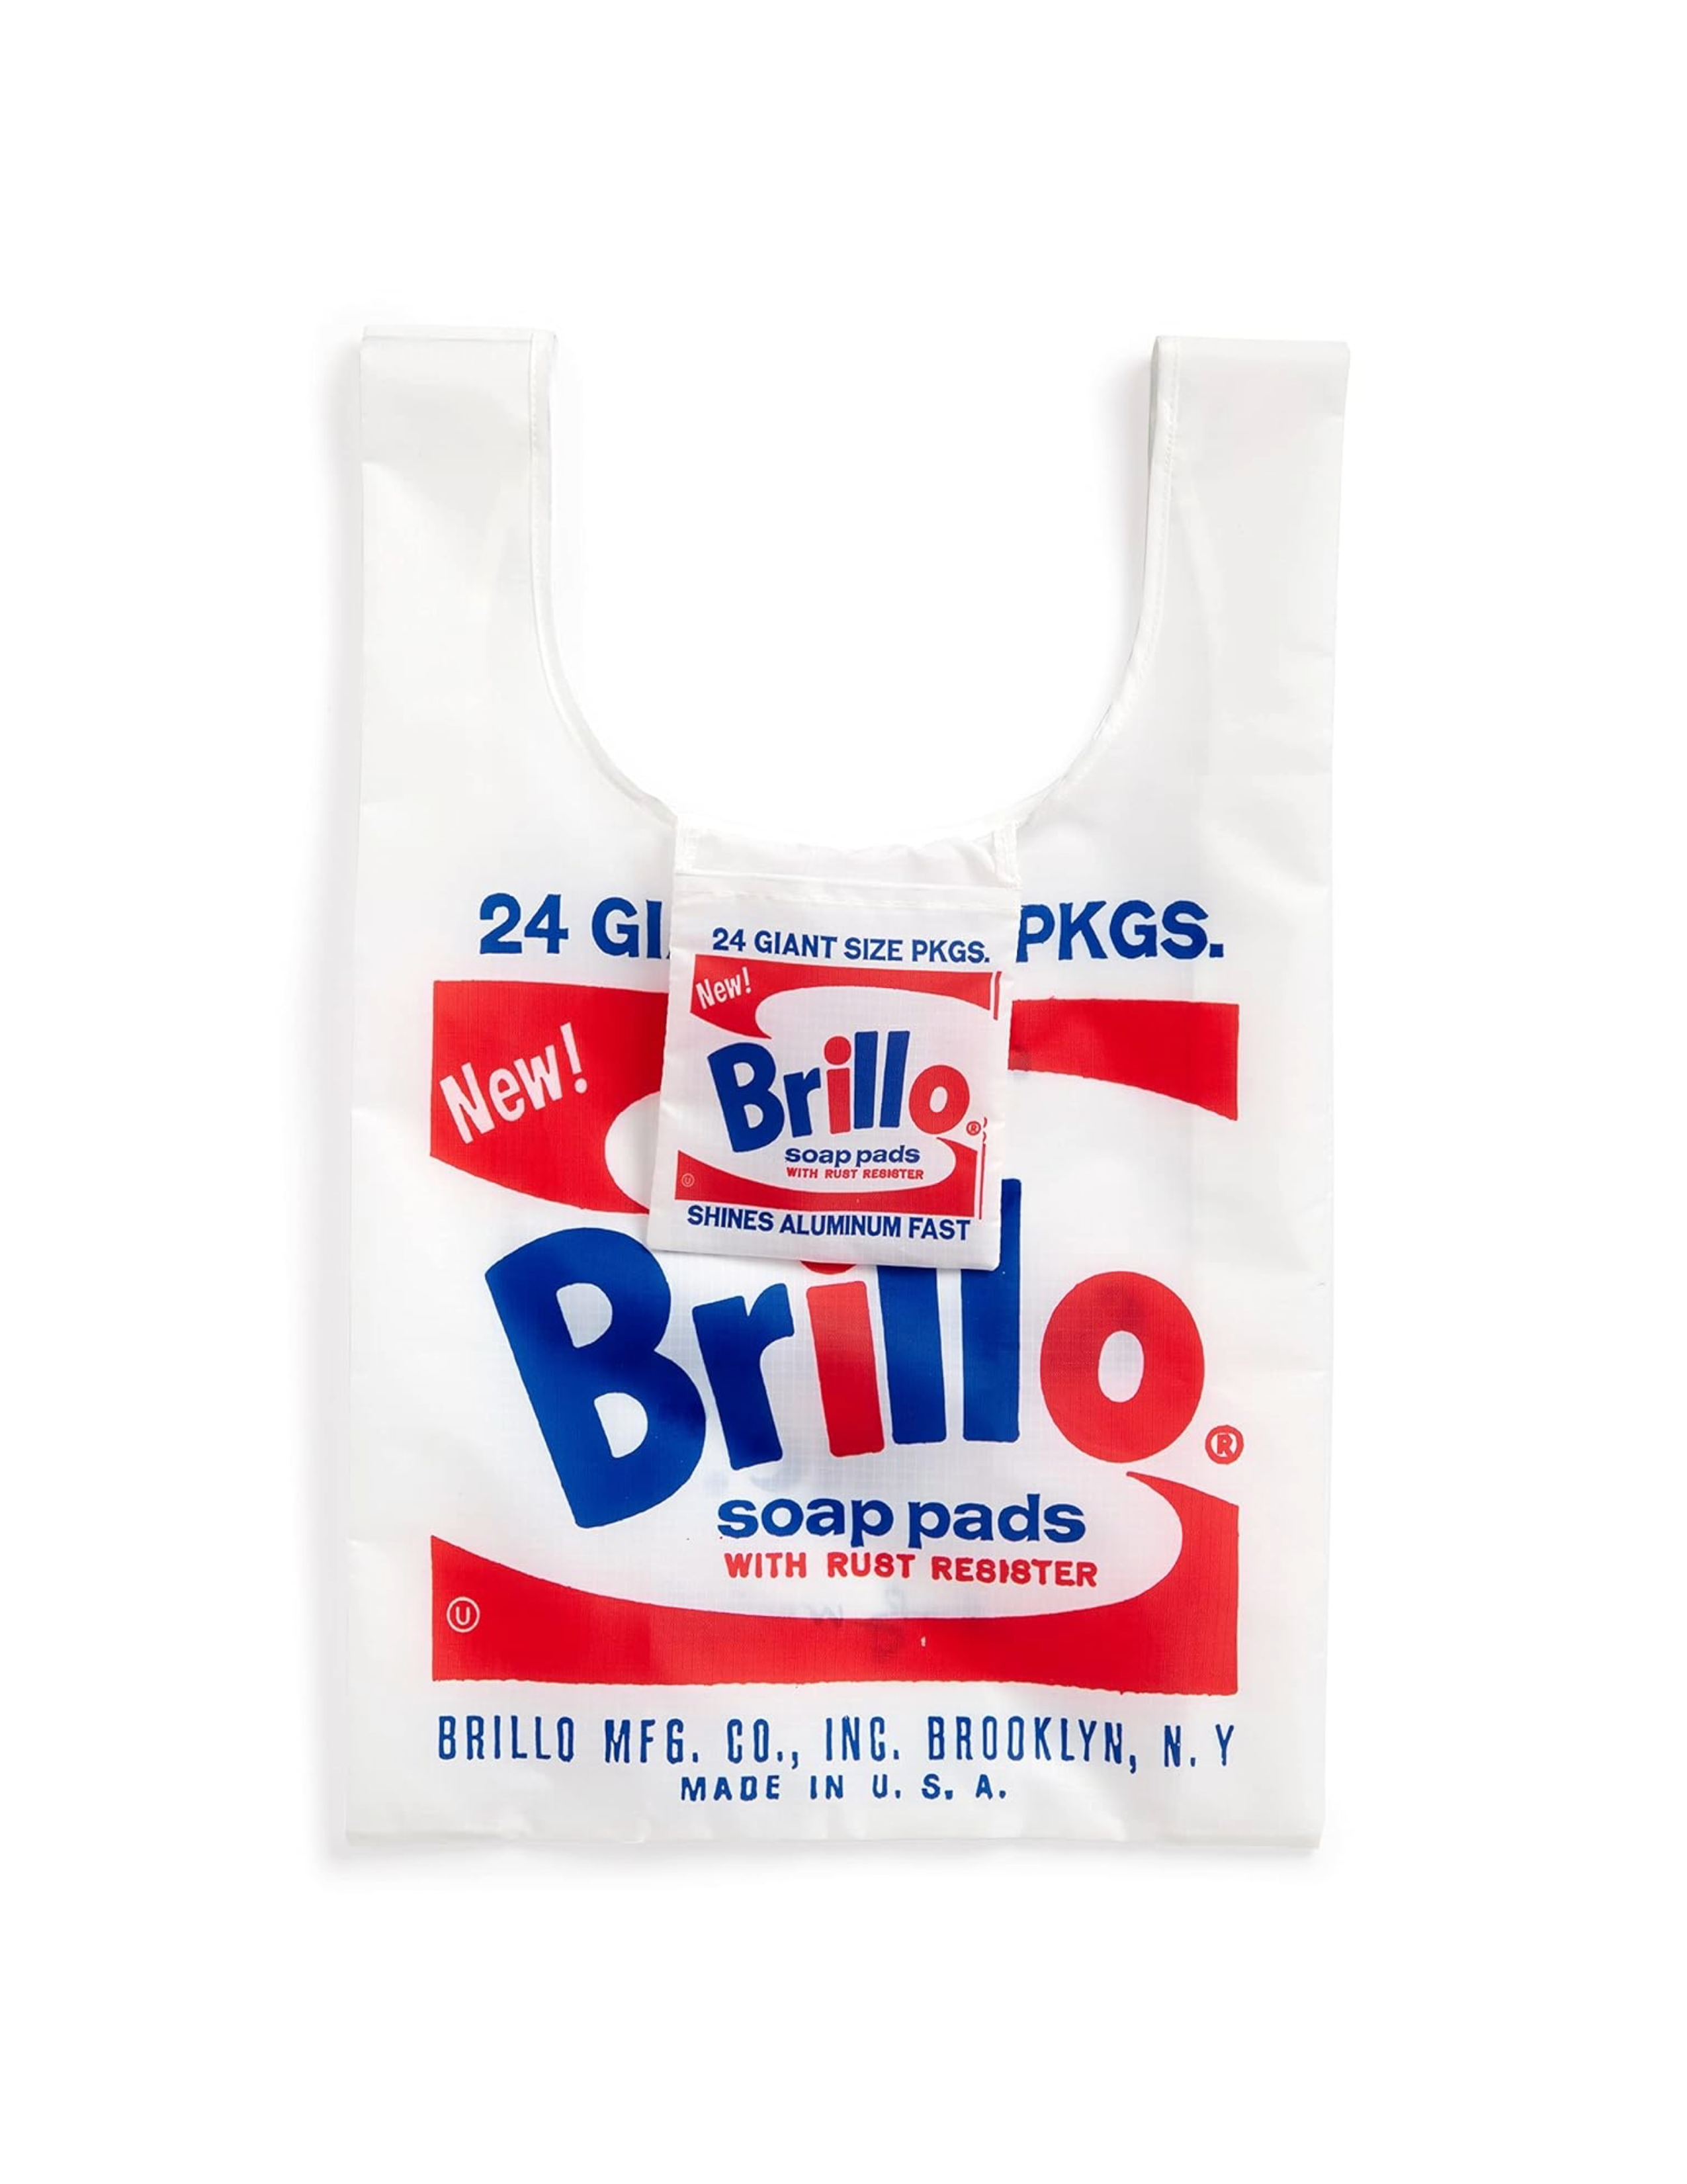 Andy Warhol Brillo Reusable Bag